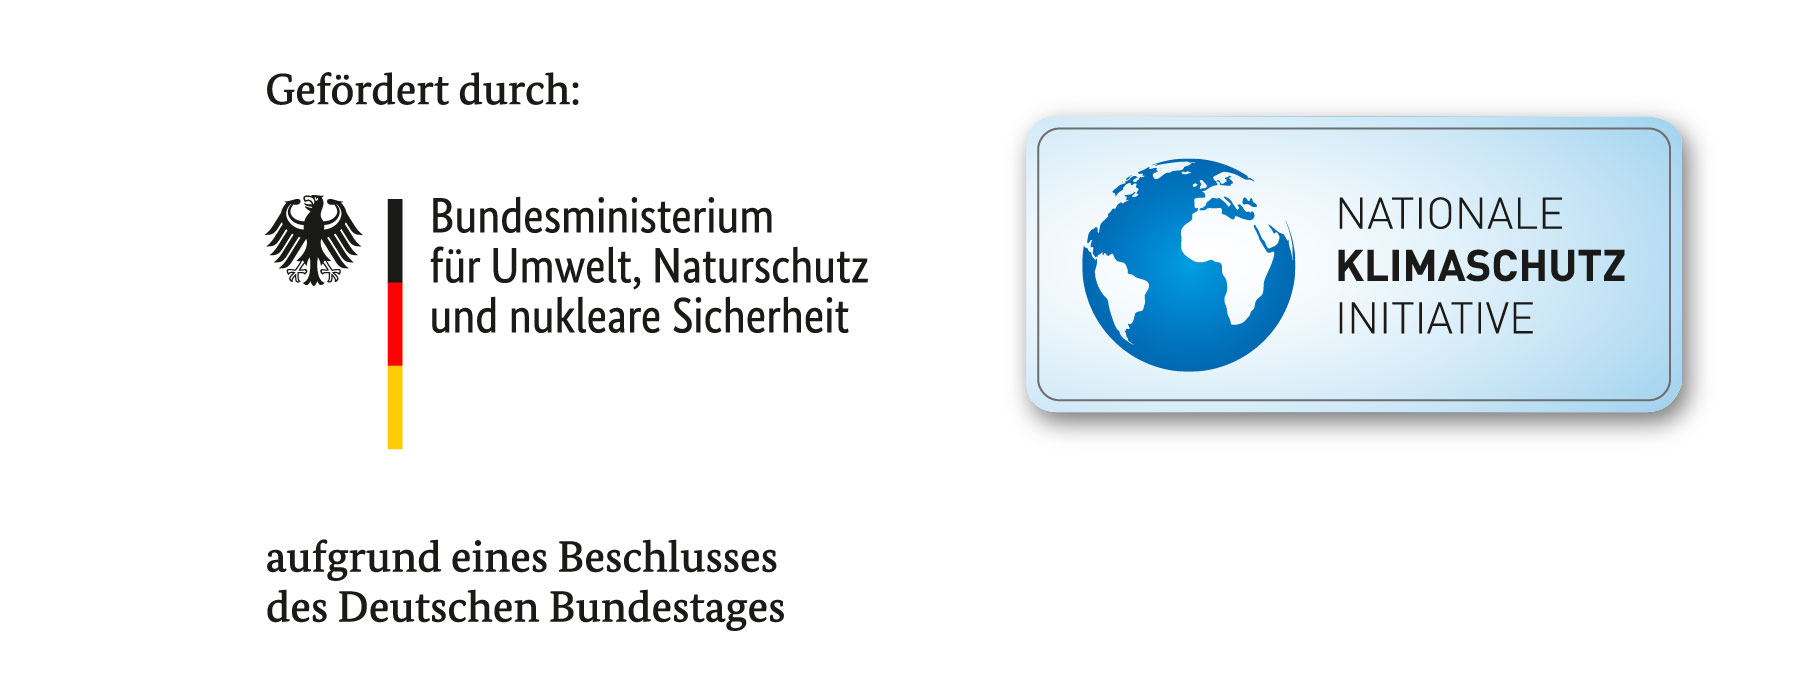 
    
            
                    Logo Bundesumweltministerium und Logo Nationale Klimaschutzinitiative
                
        
